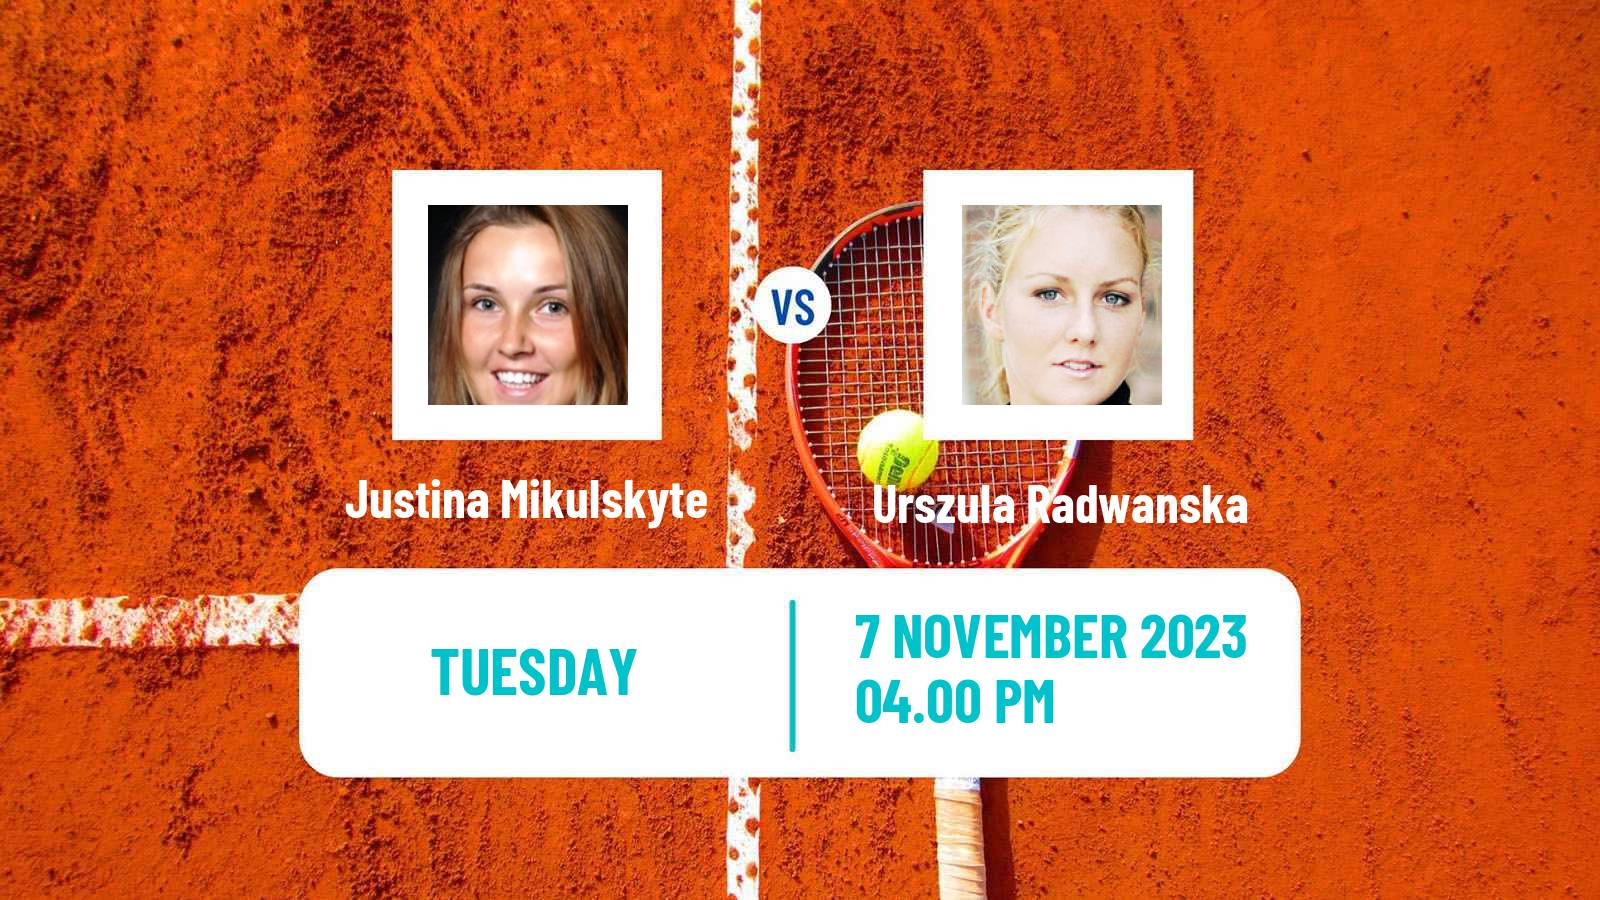 Tennis ITF W60 H Calgary Women 2023 Justina Mikulskyte - Urszula Radwanska